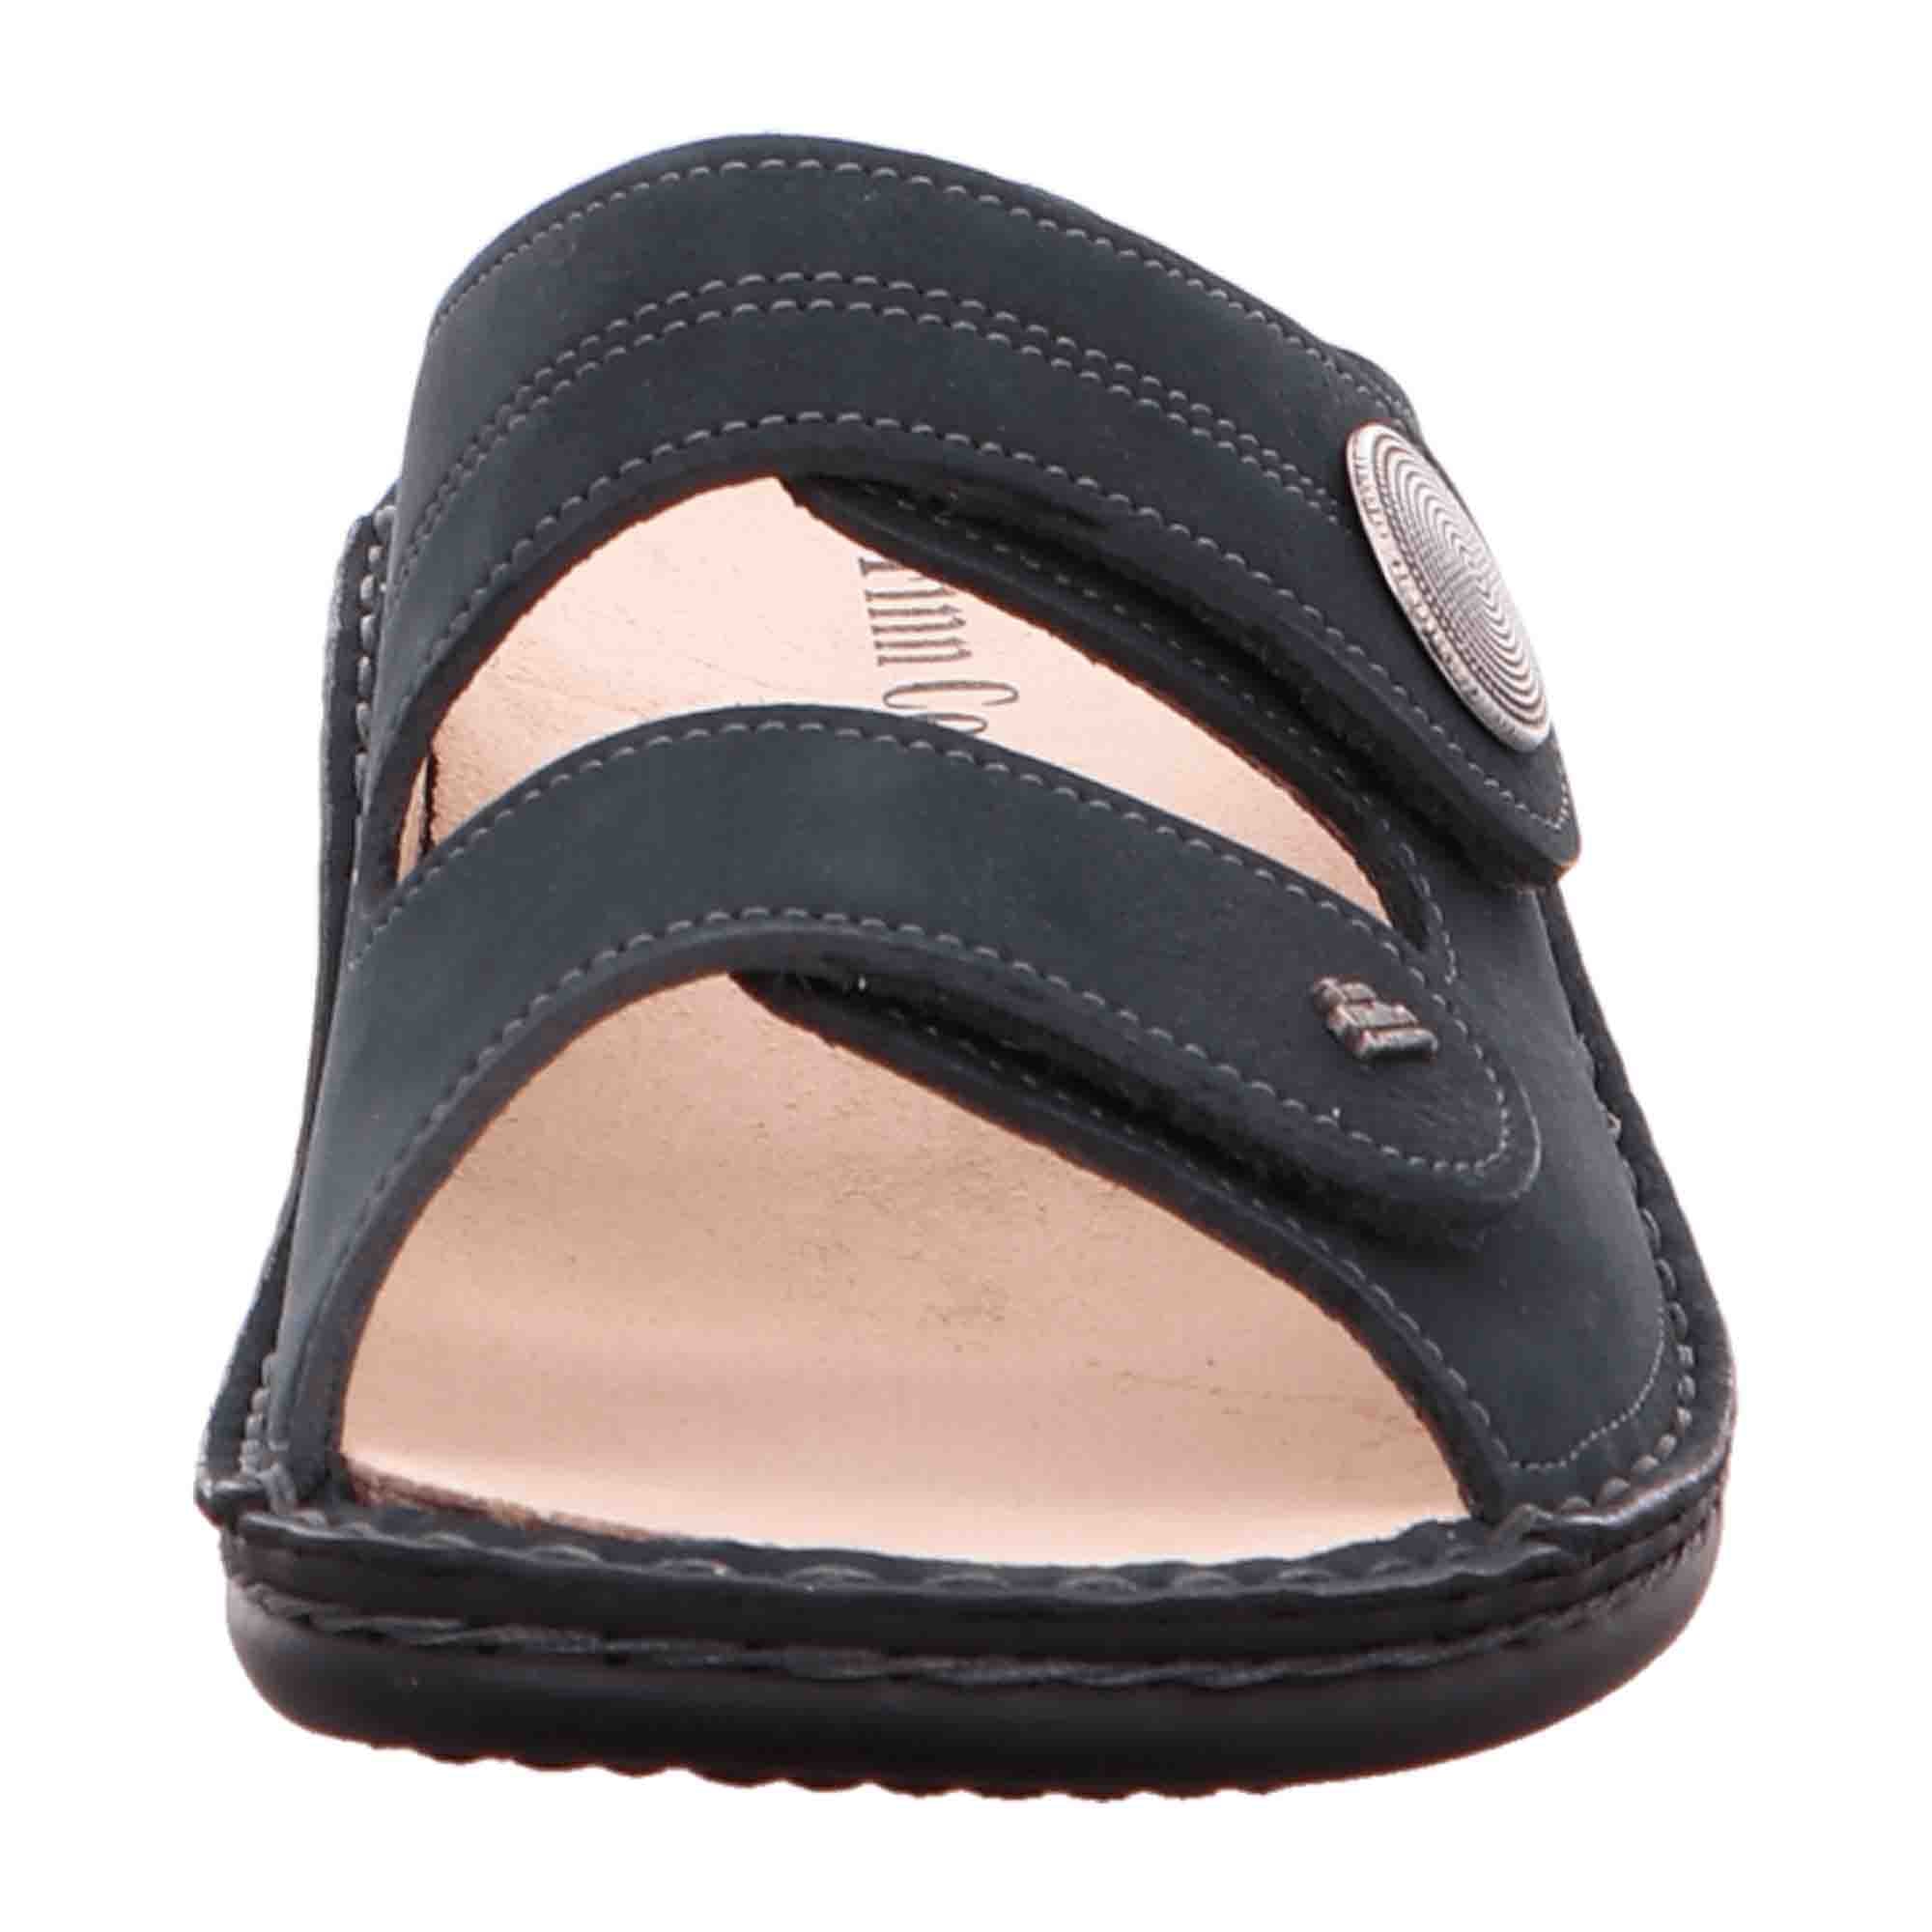 Finn Comfort Sansibar Women's Comfort Sandals - Stylish Blue